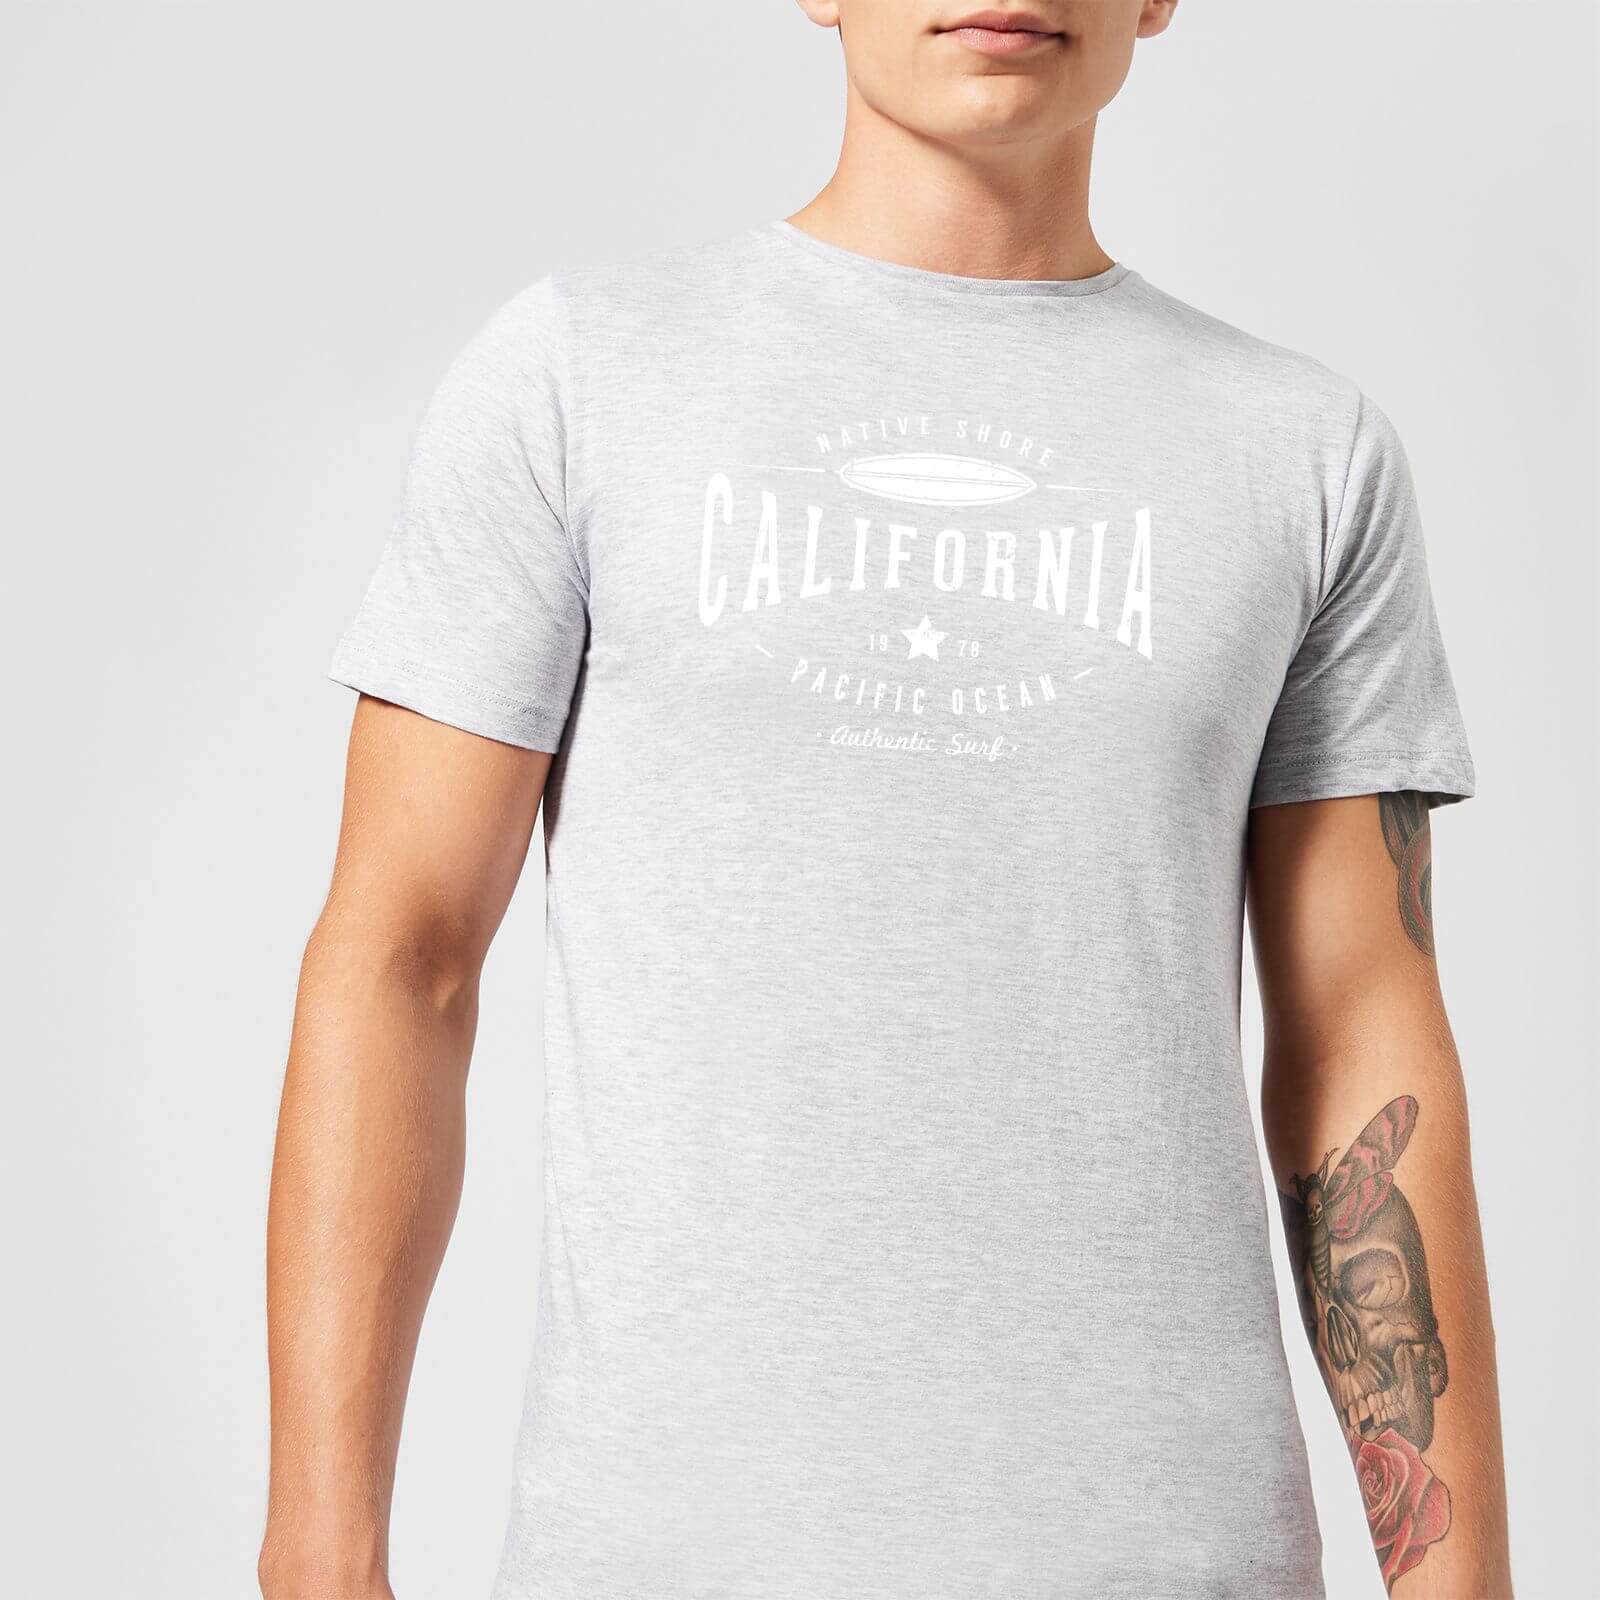 Native Shore Men's California T-Shirt - Grey - 3XL - Grey